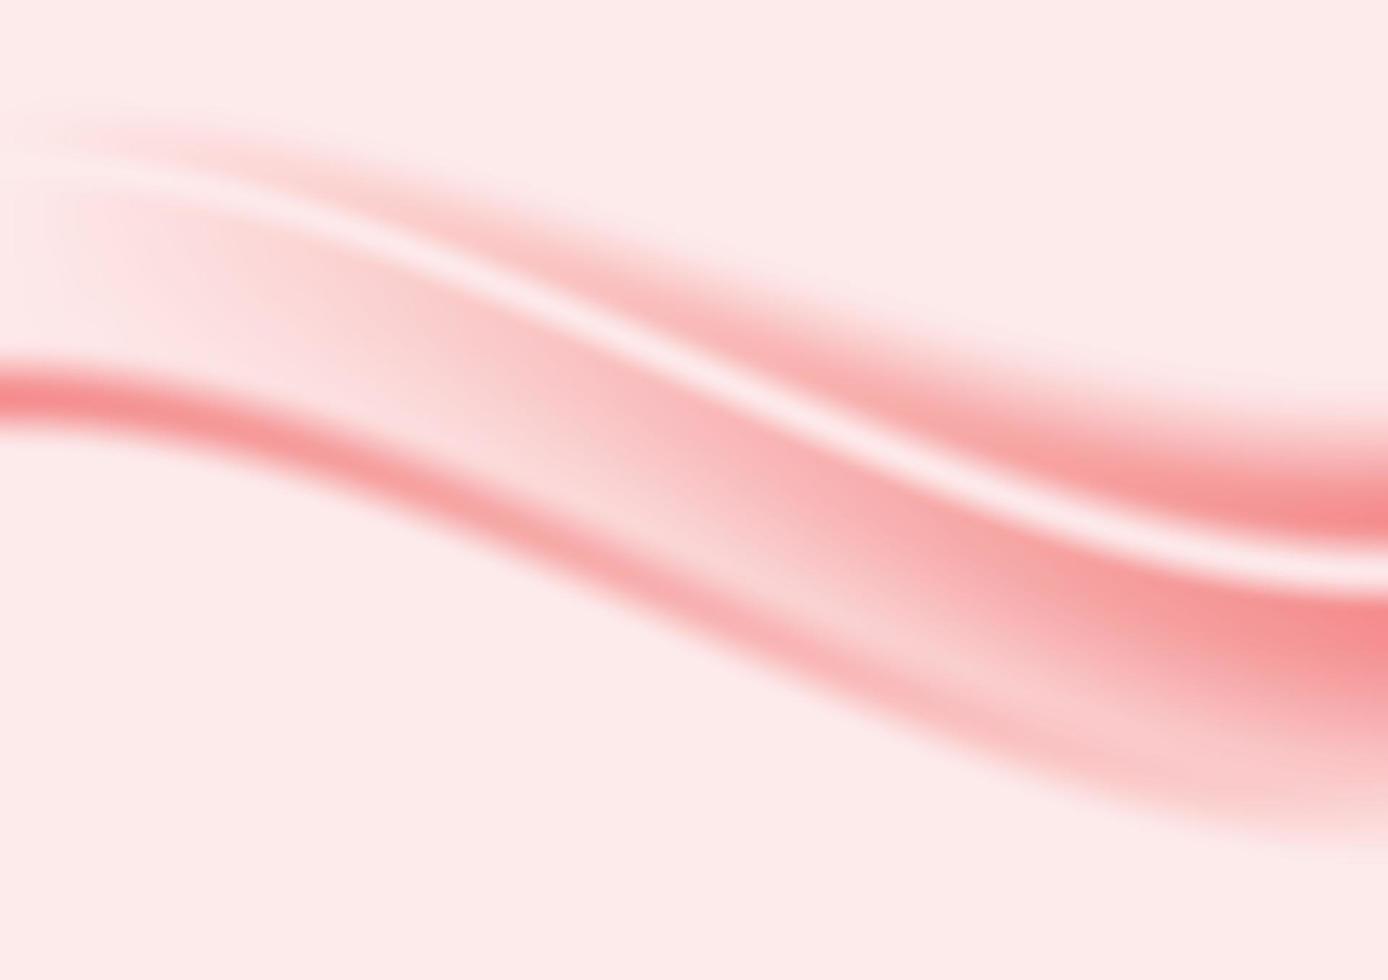 Hintergrund rosa Farbtöne abstrakten Stil. Illustration vom Vektor über modernes Template-Deluxe-Design.